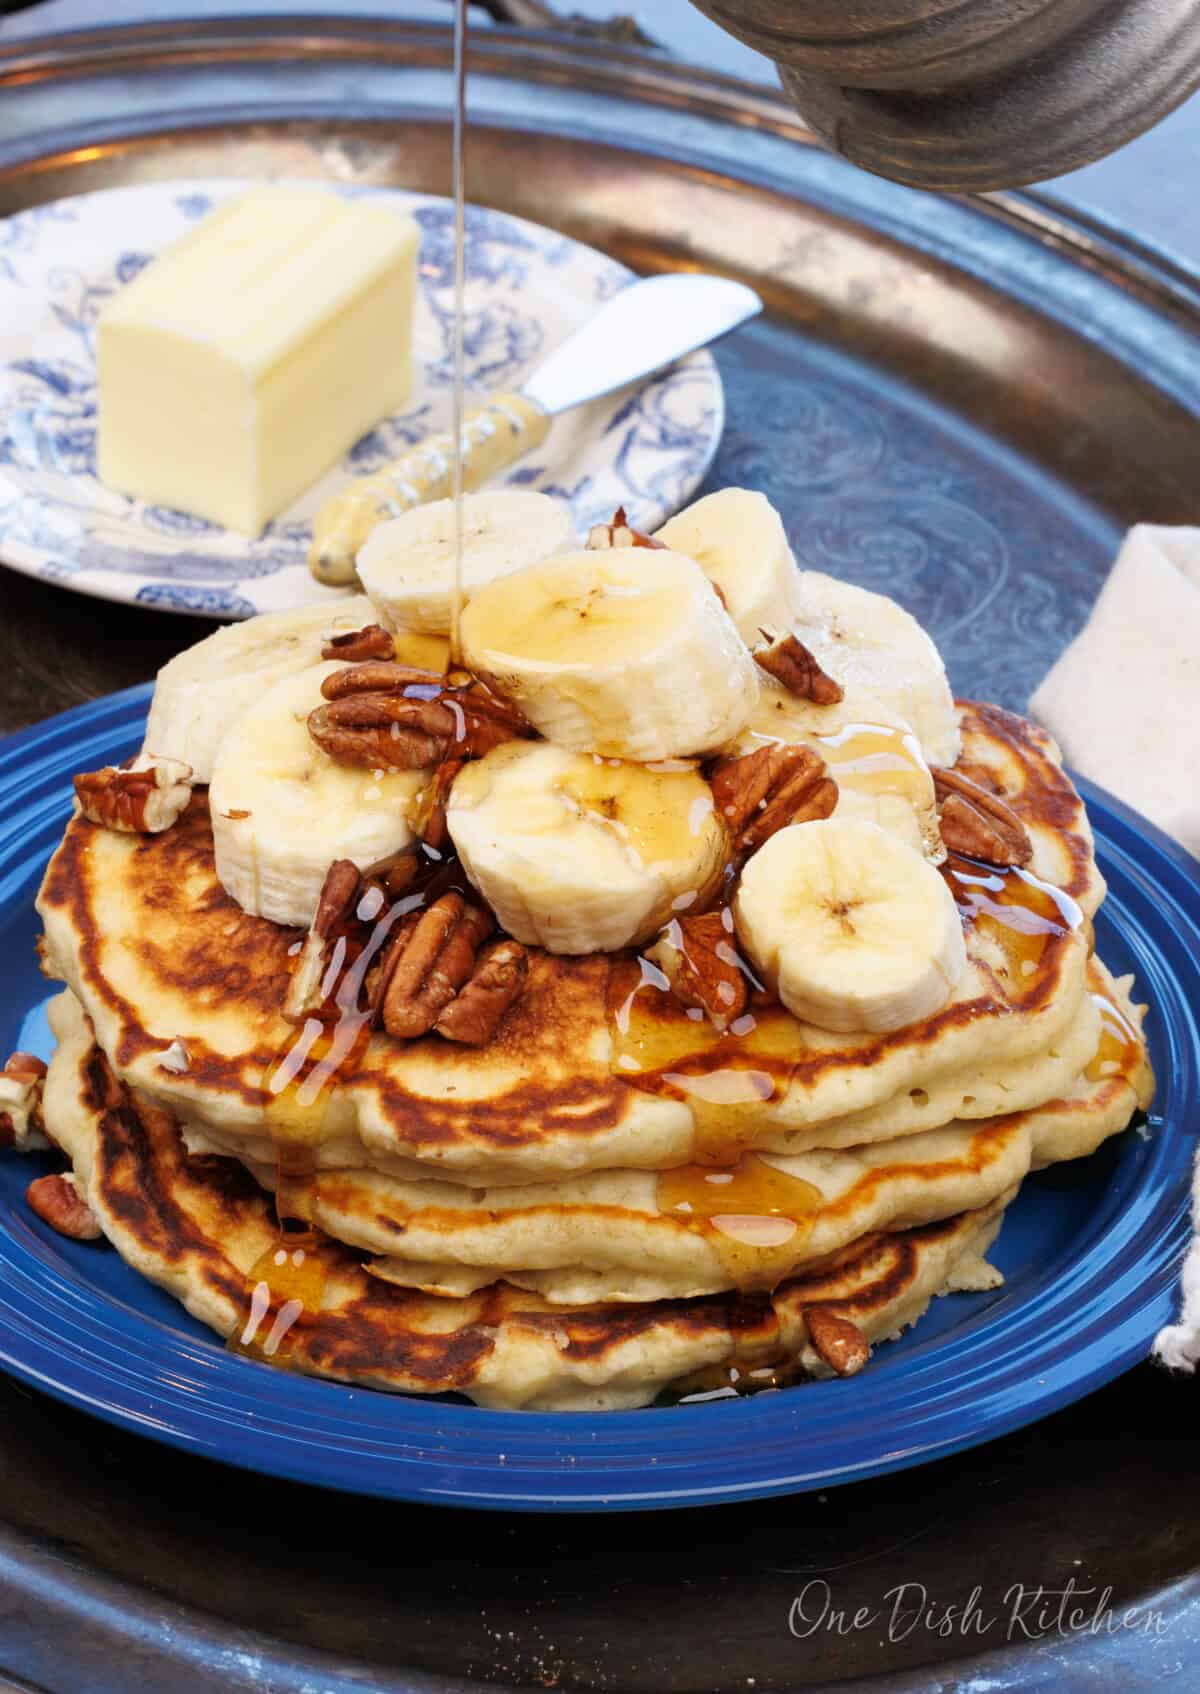 Flourless Banana & Protein Powder Pancakes - Nourish & Tempt